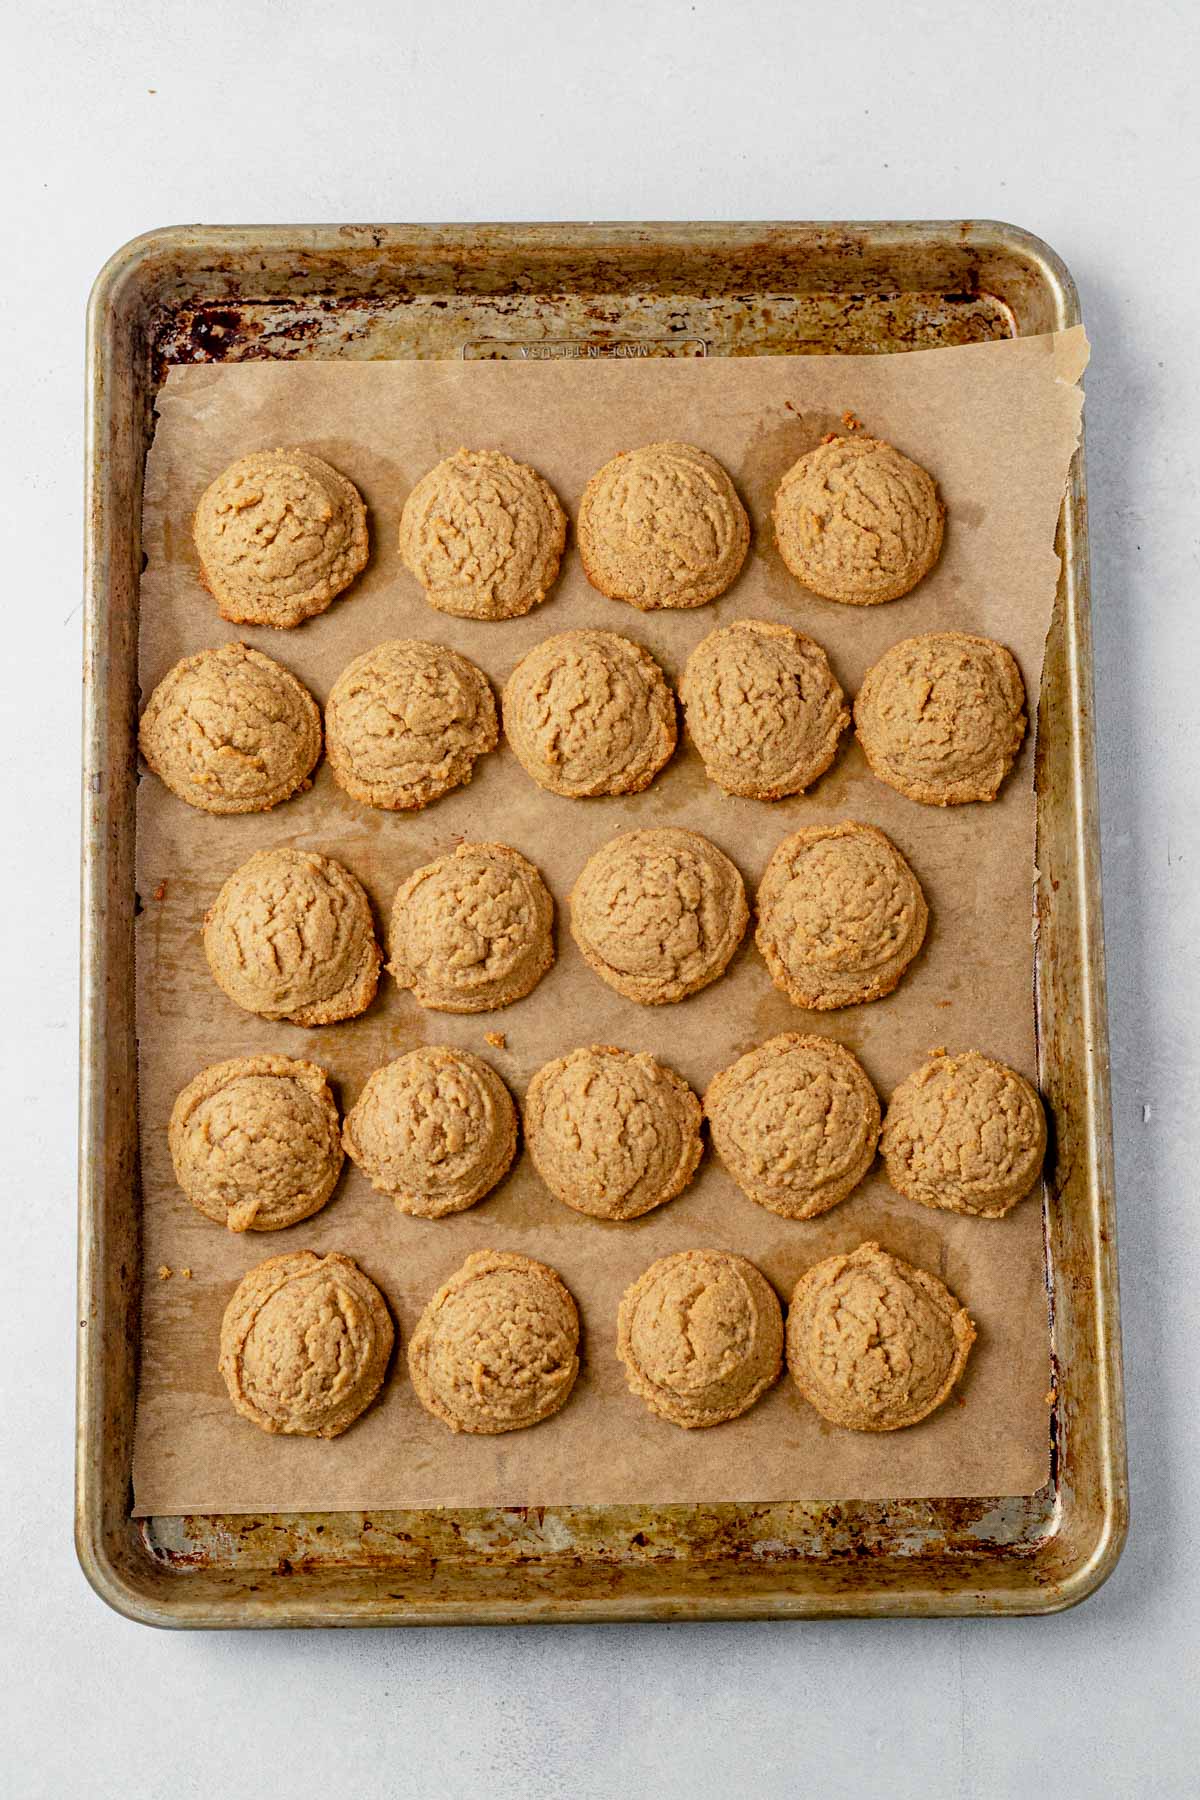 keto almond flour peanut butter cookies cooling on a baking sheet